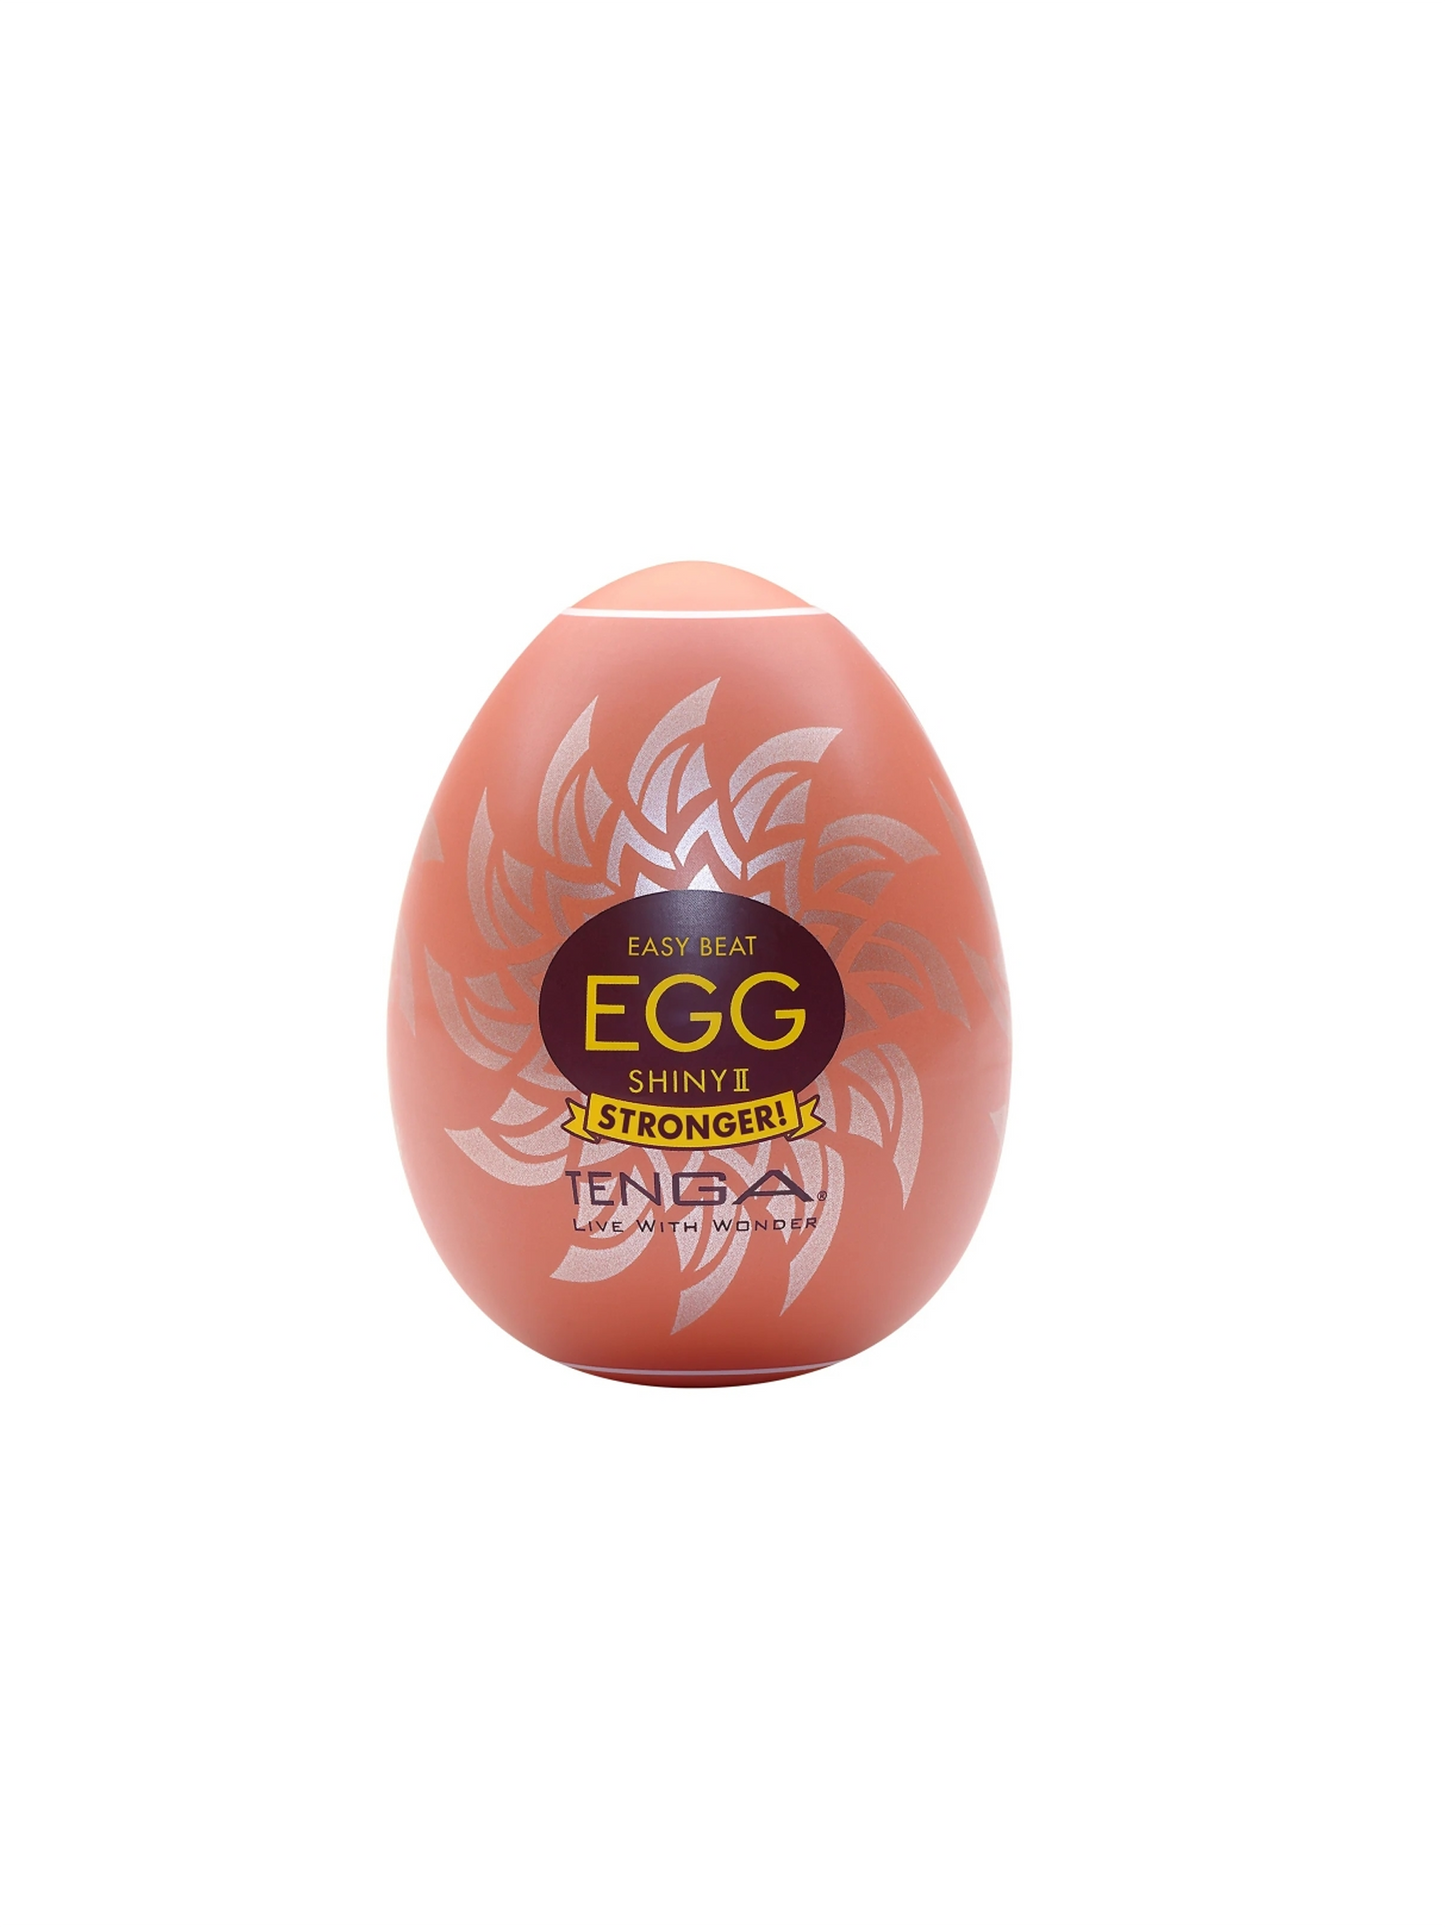 Tenga Egg Sleeve Shiny II with Brown Exterior